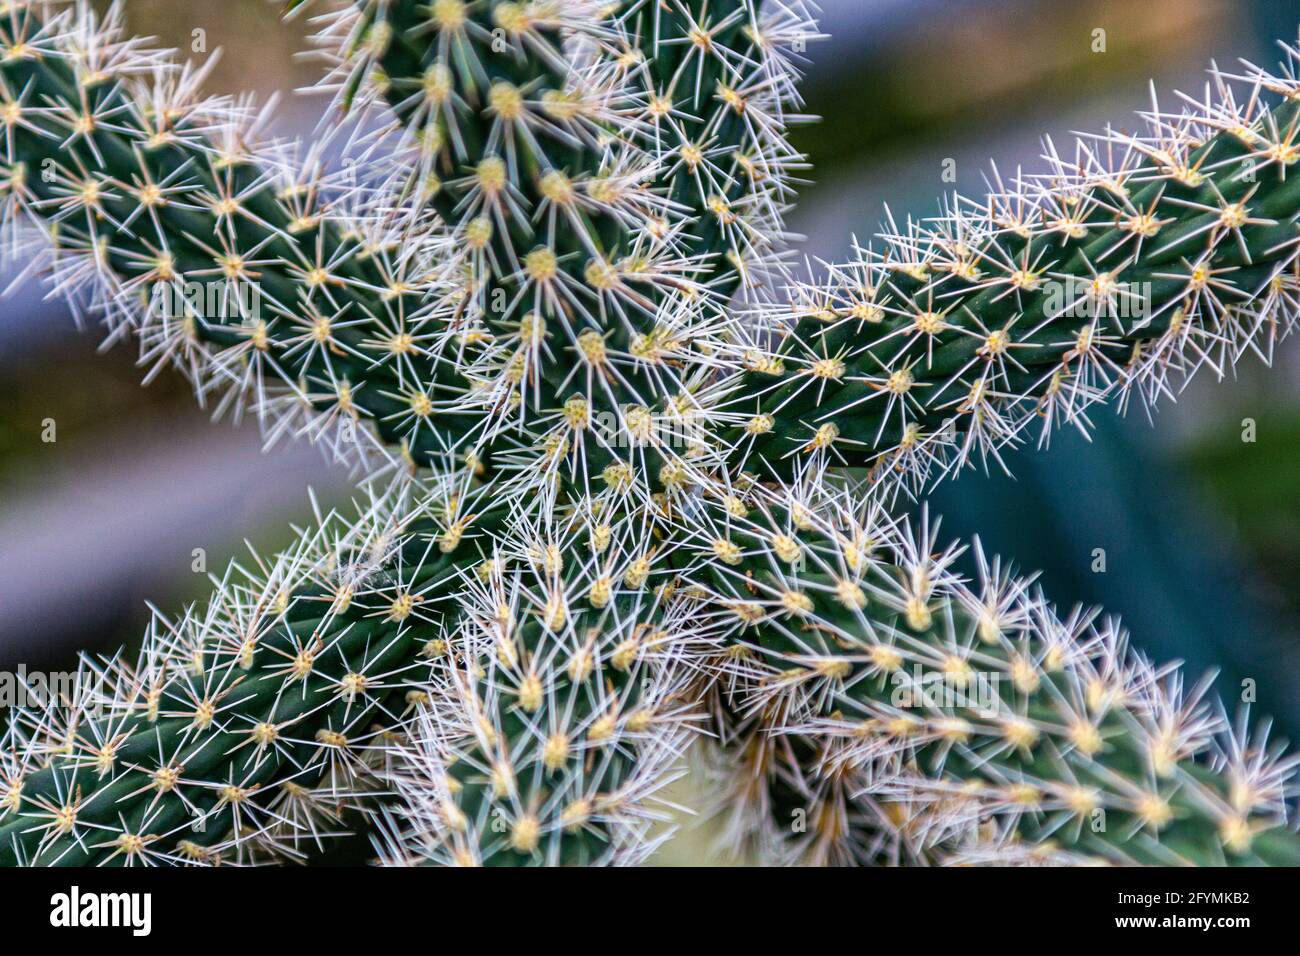 Cactus needles, cactus in the shape of stars Macro photo  Stock Photo